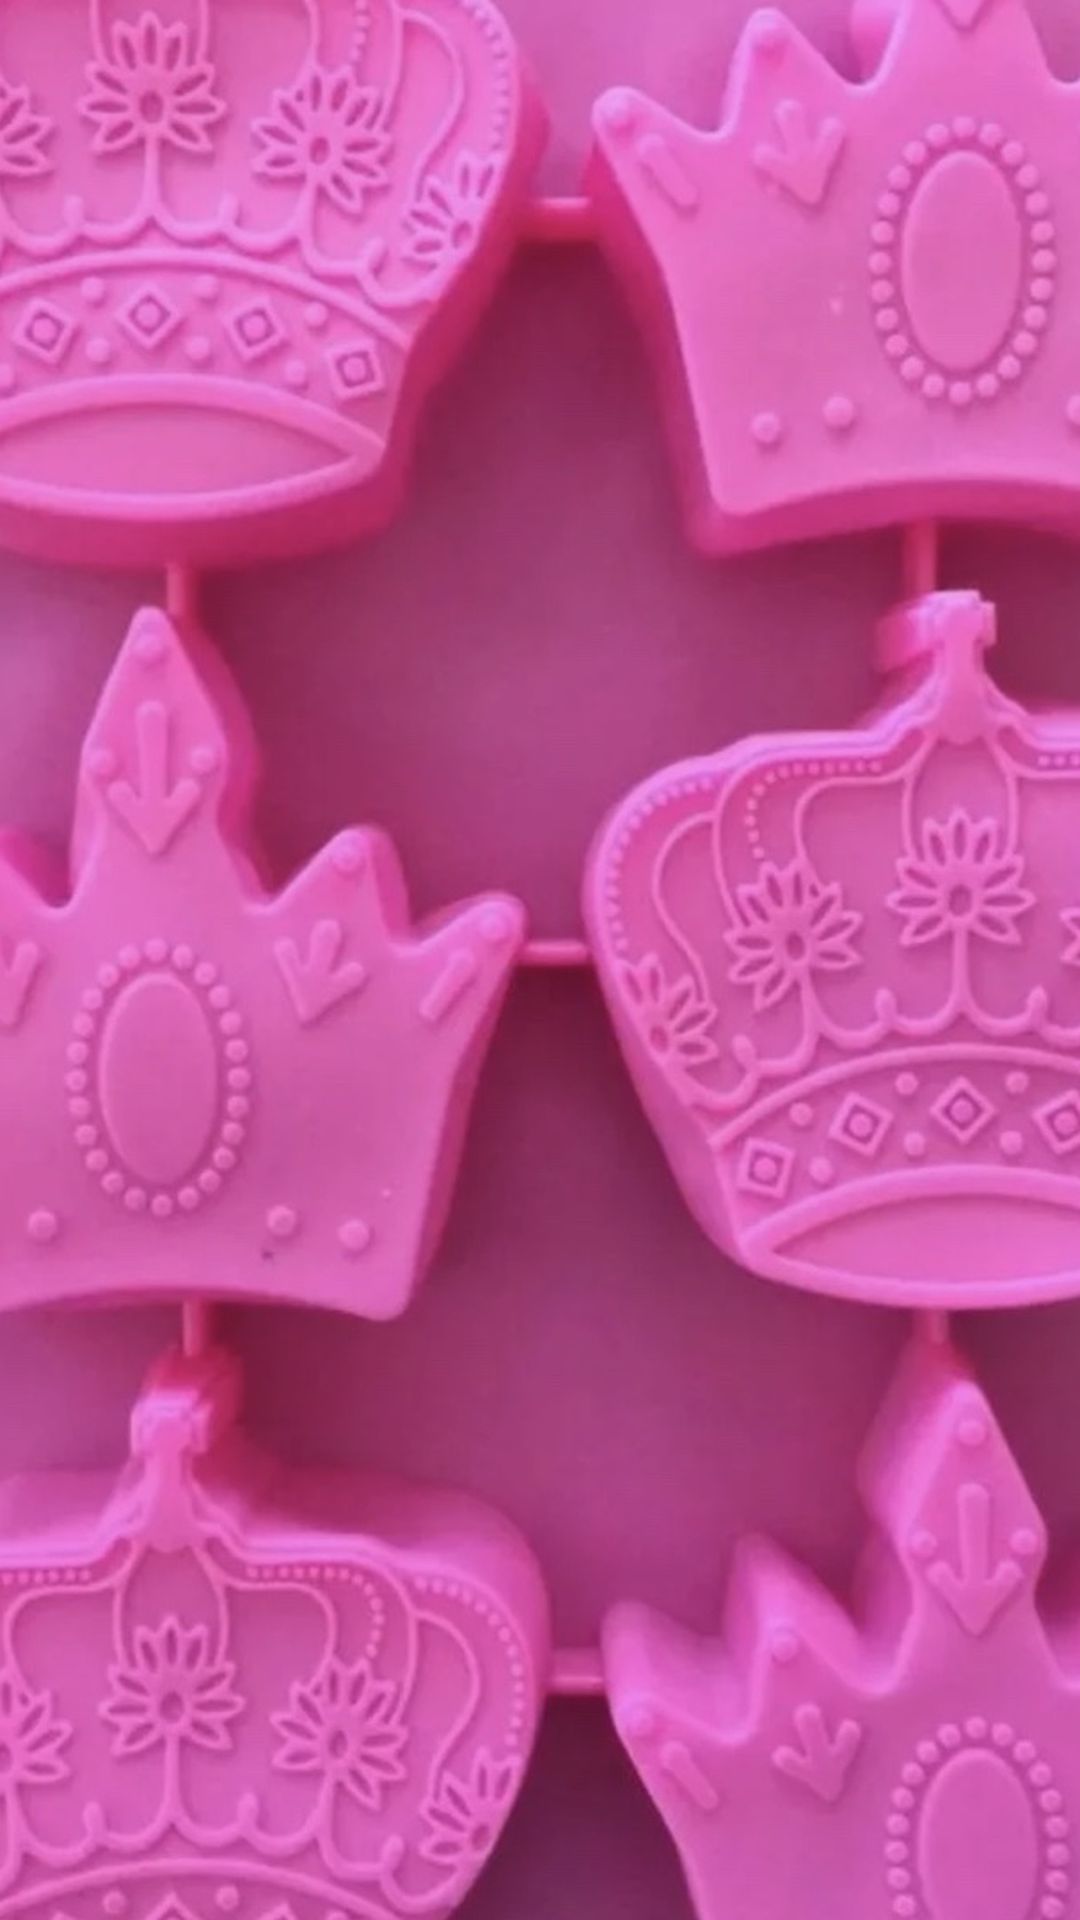 Princess Crown Tiara Cake Pan Jello Mold